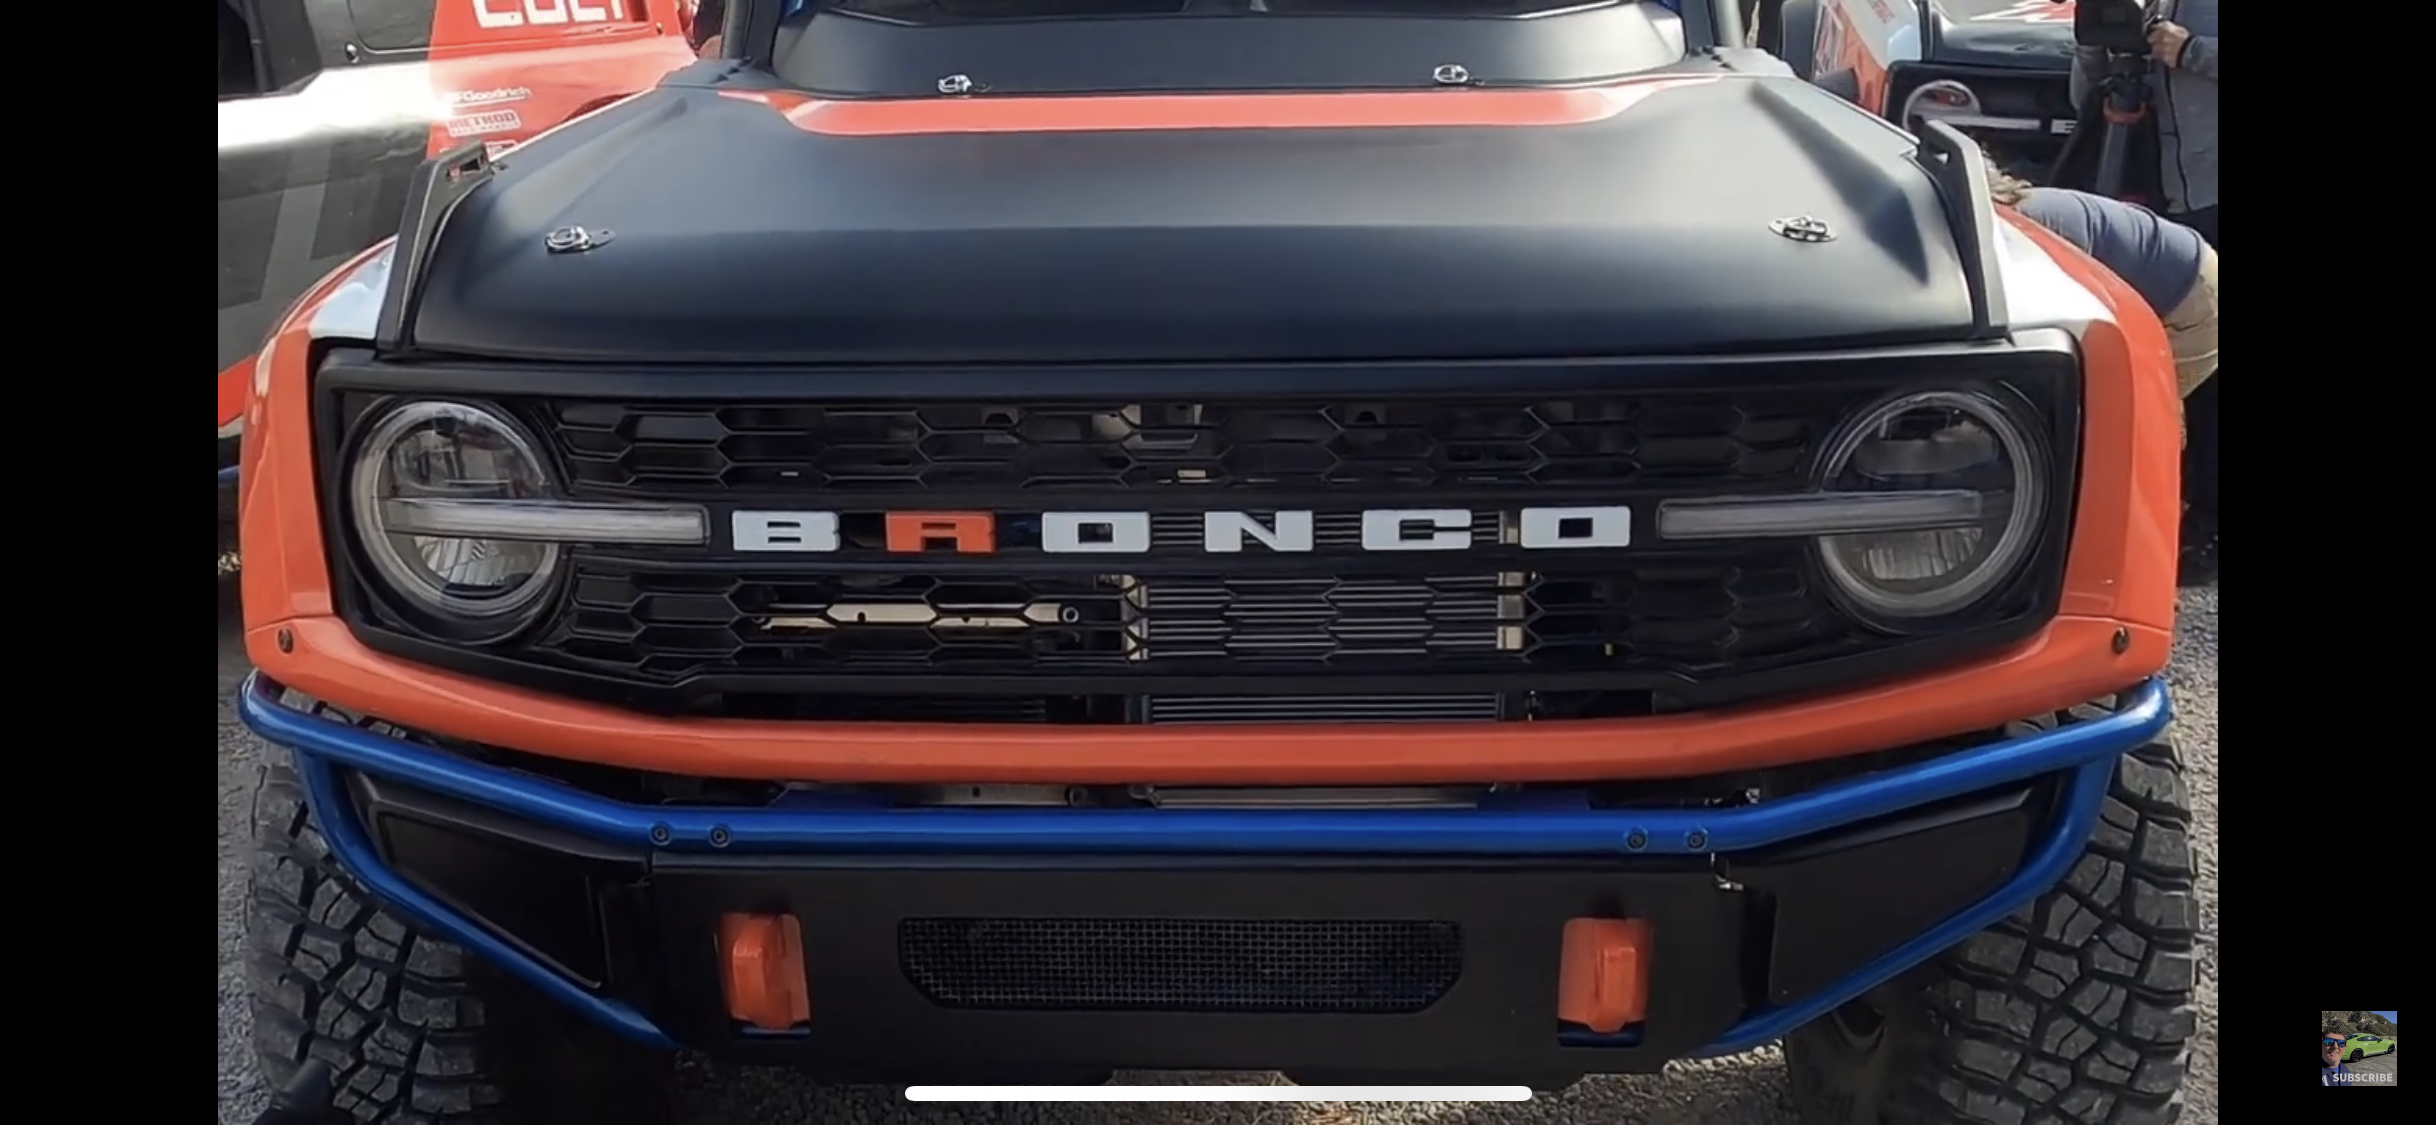 Red Line Oil  Bronco6G - 2021+ Ford Bronco & Bronco Raptor Forum, News,  Blog & Owners Community